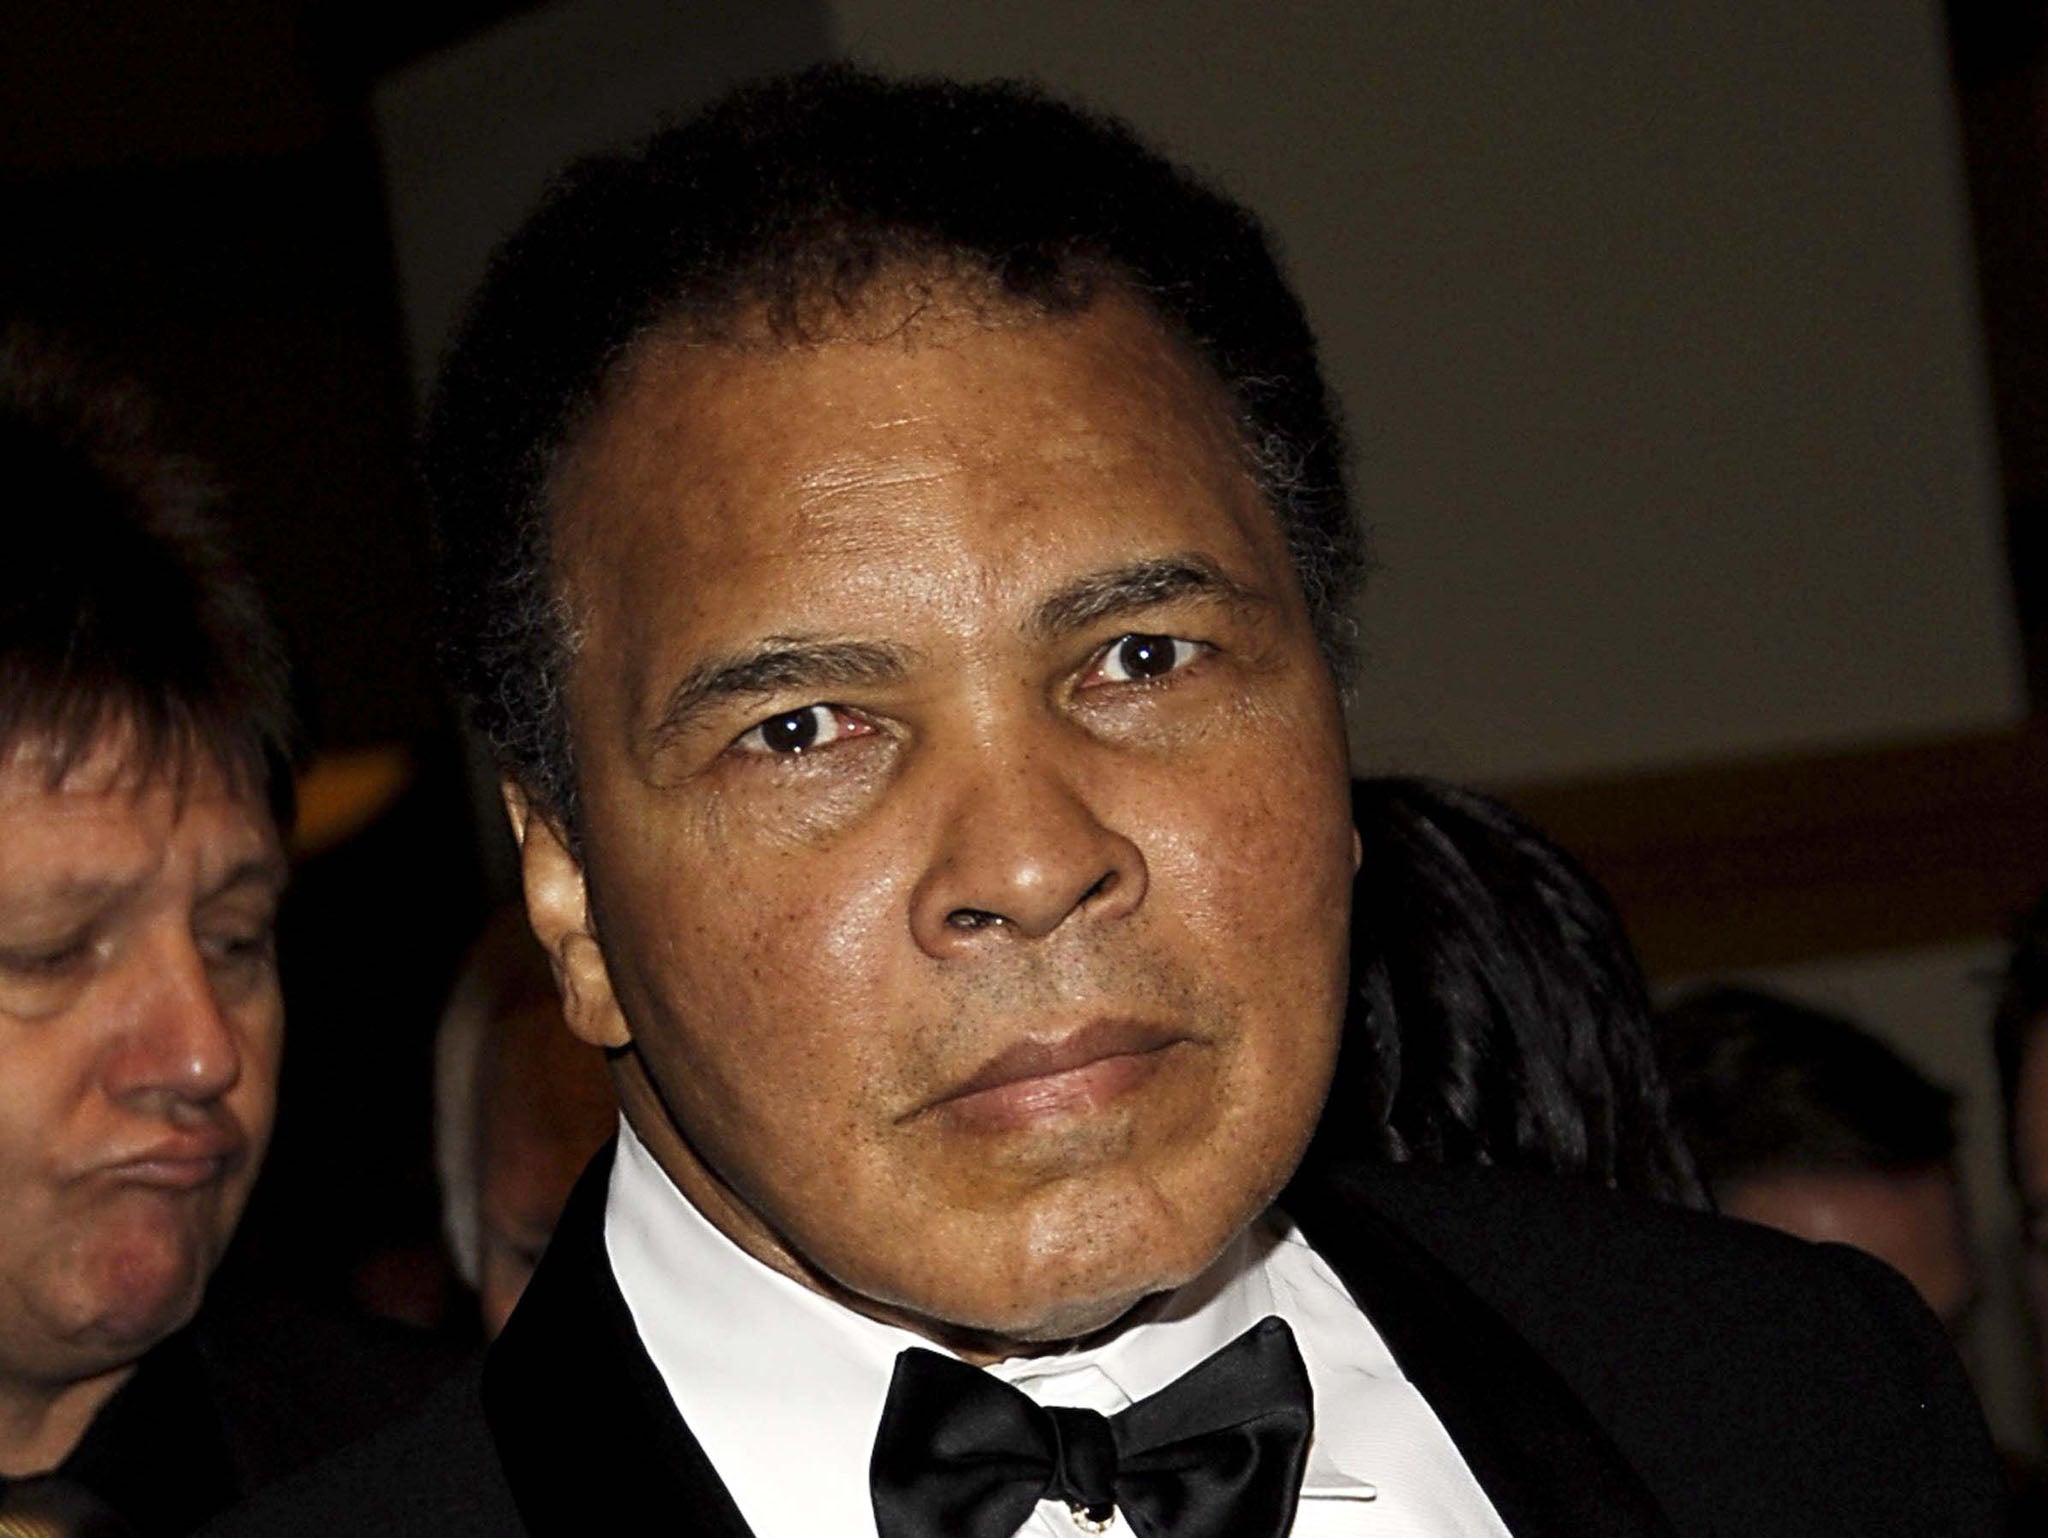 Muhammad Ali pictured in better health in 2006